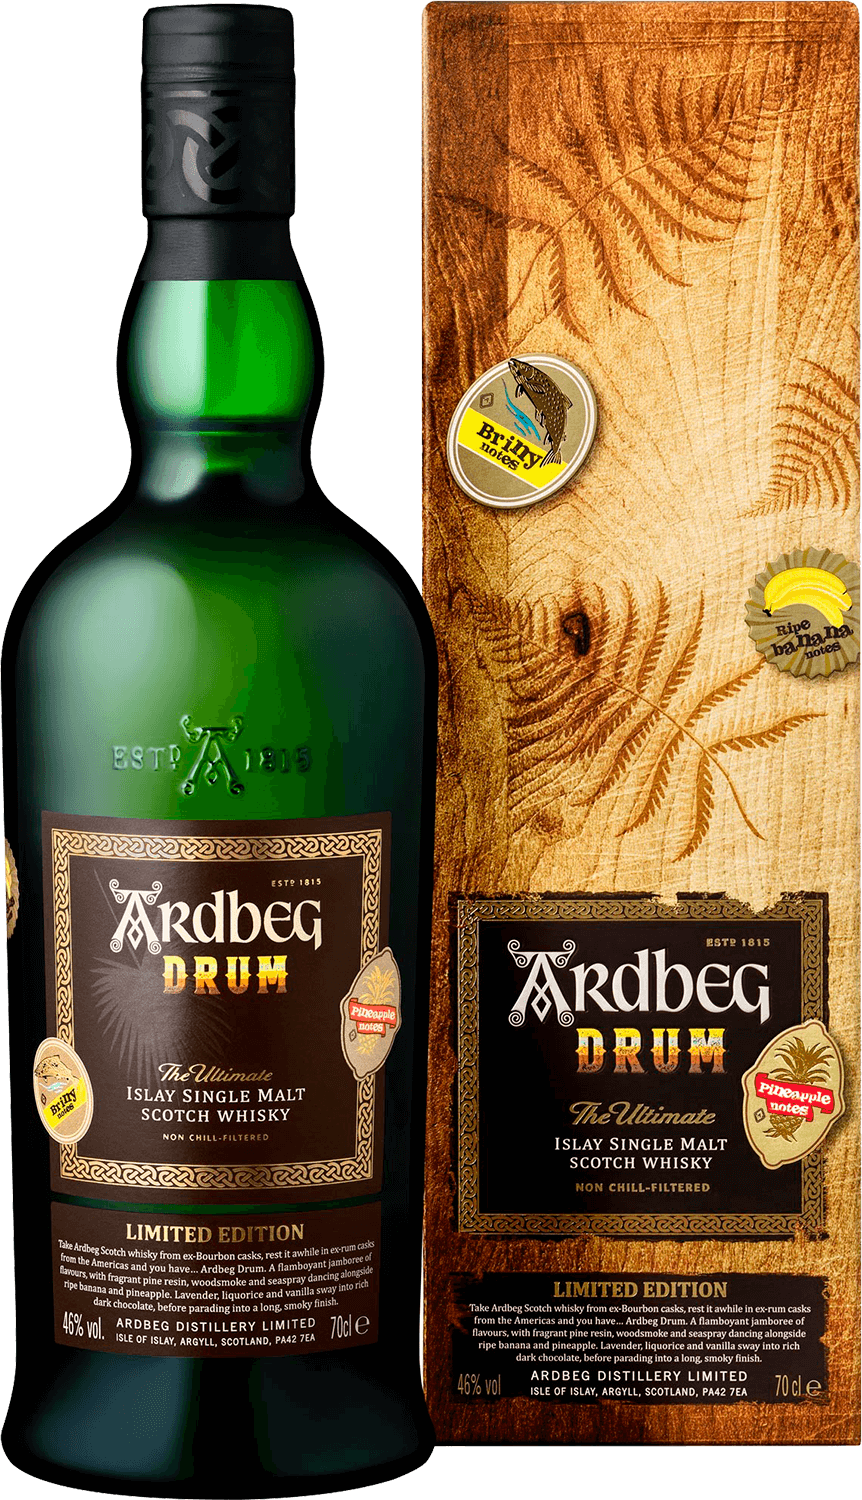 Ardbeg Drum Islay Single Malt Scotch Whisky (gift box) lagavulin islay single malt scotch whisky 16 years old gift box